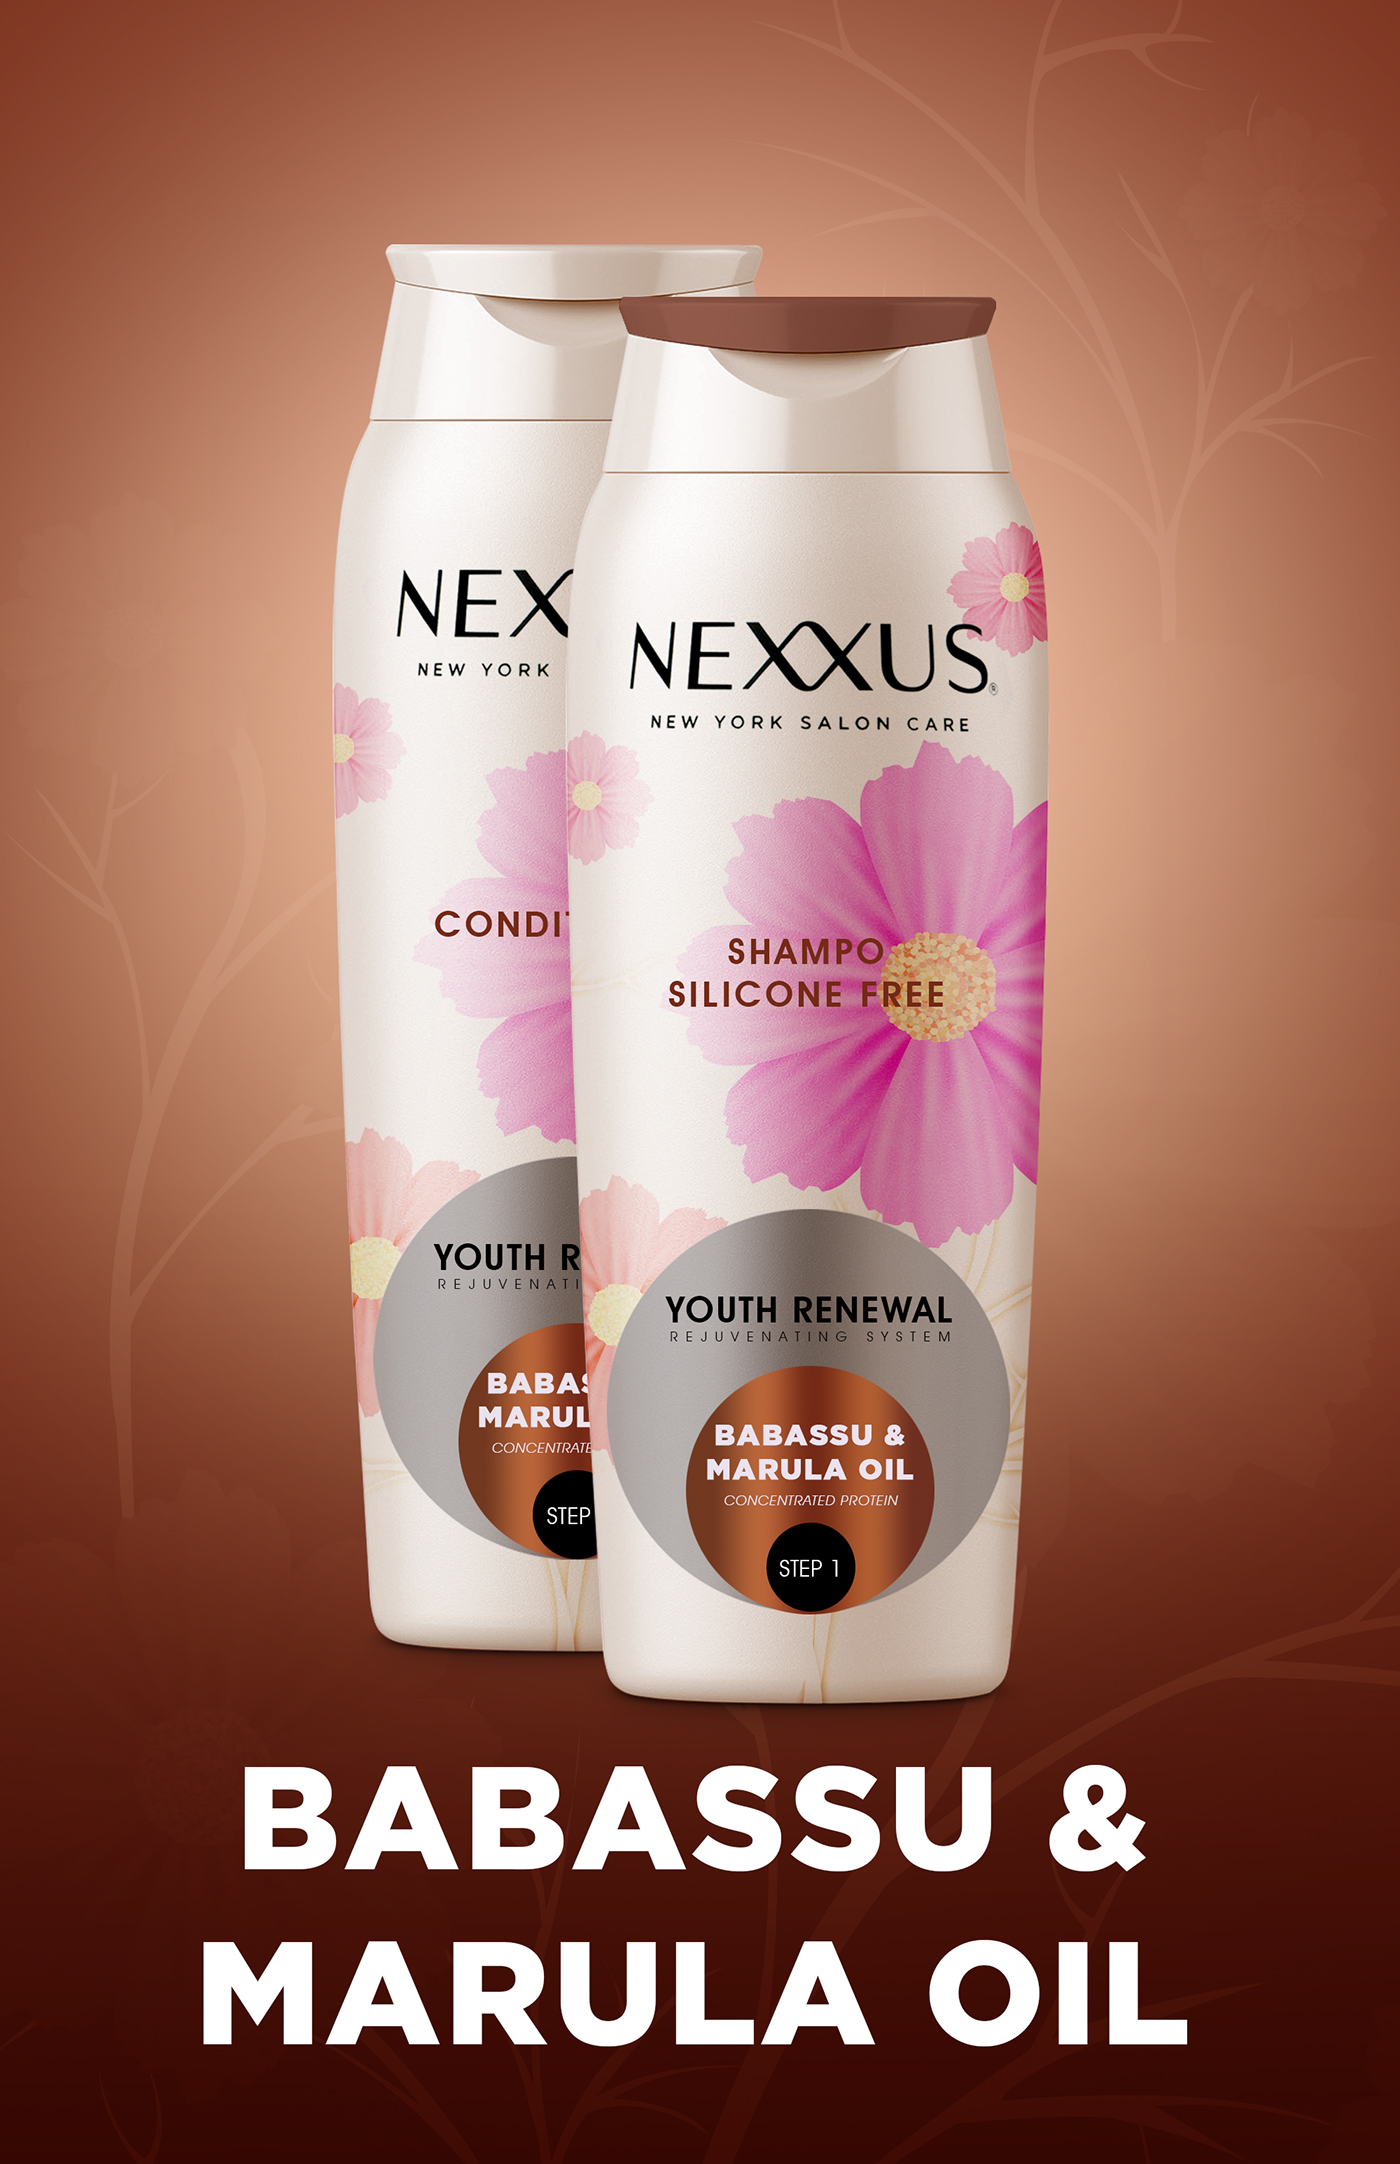 Nexxus Packaging premium minimalist clean Golden Ratio